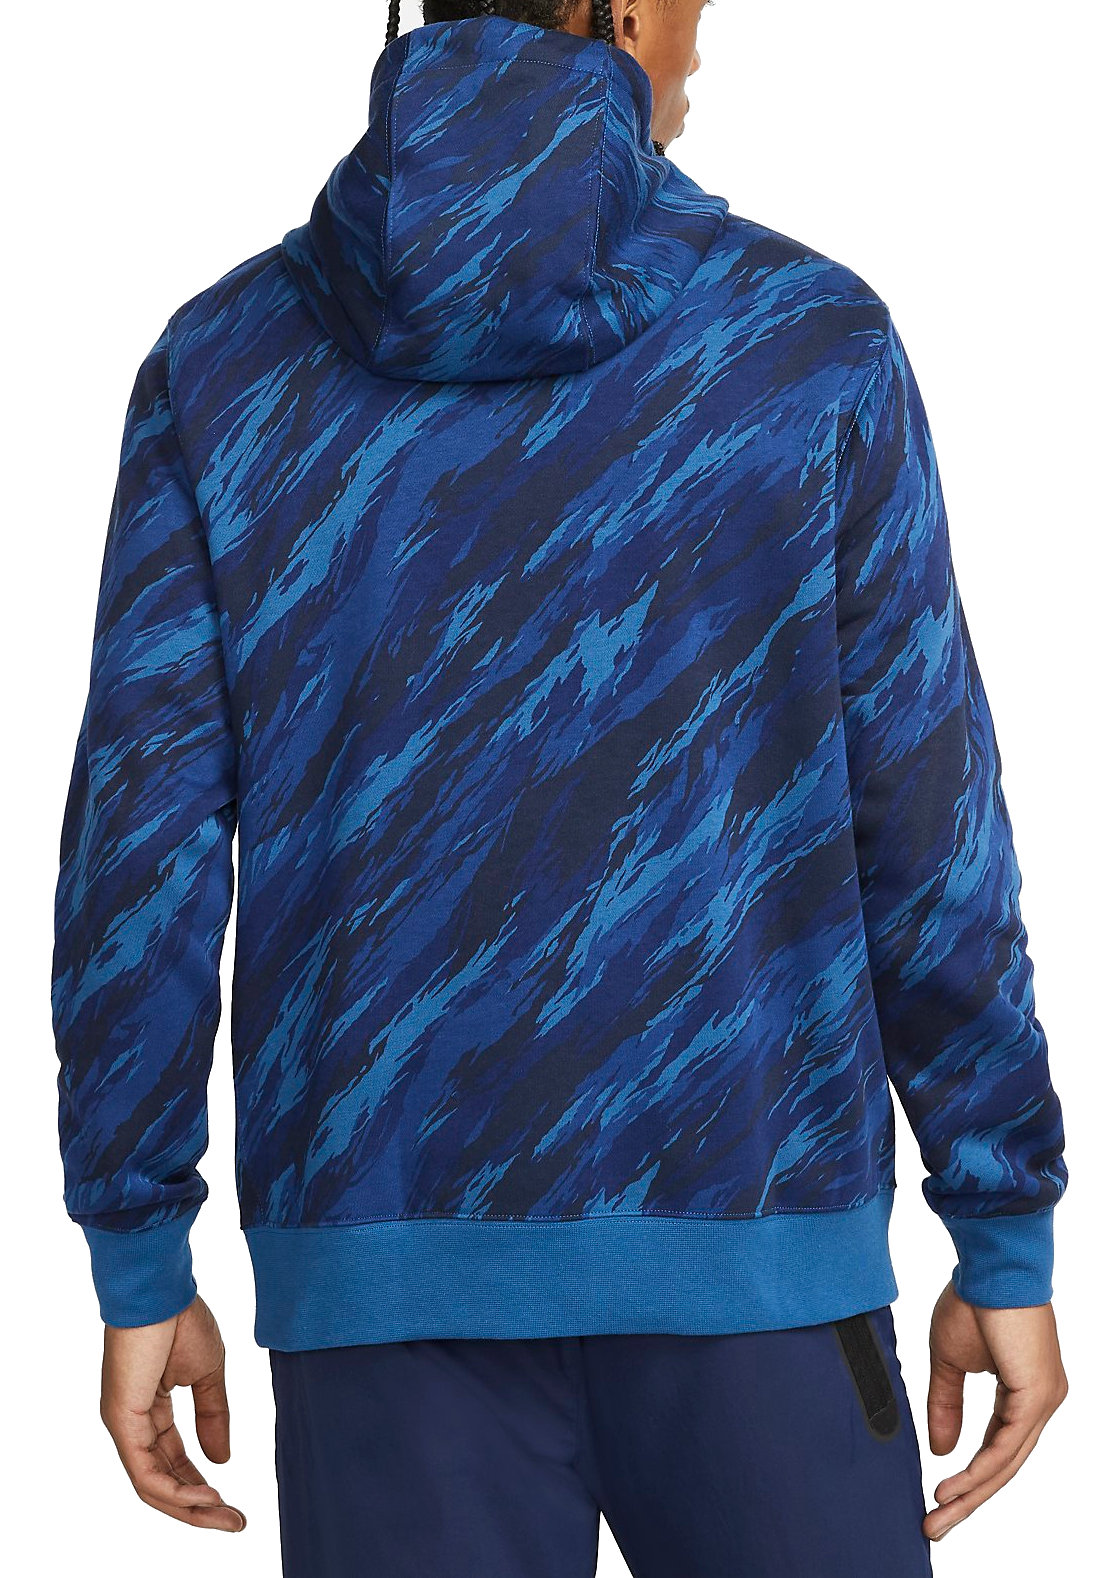 Hooded sweatshirt Nike Sportswear Club Fleece Pullover Hoodie